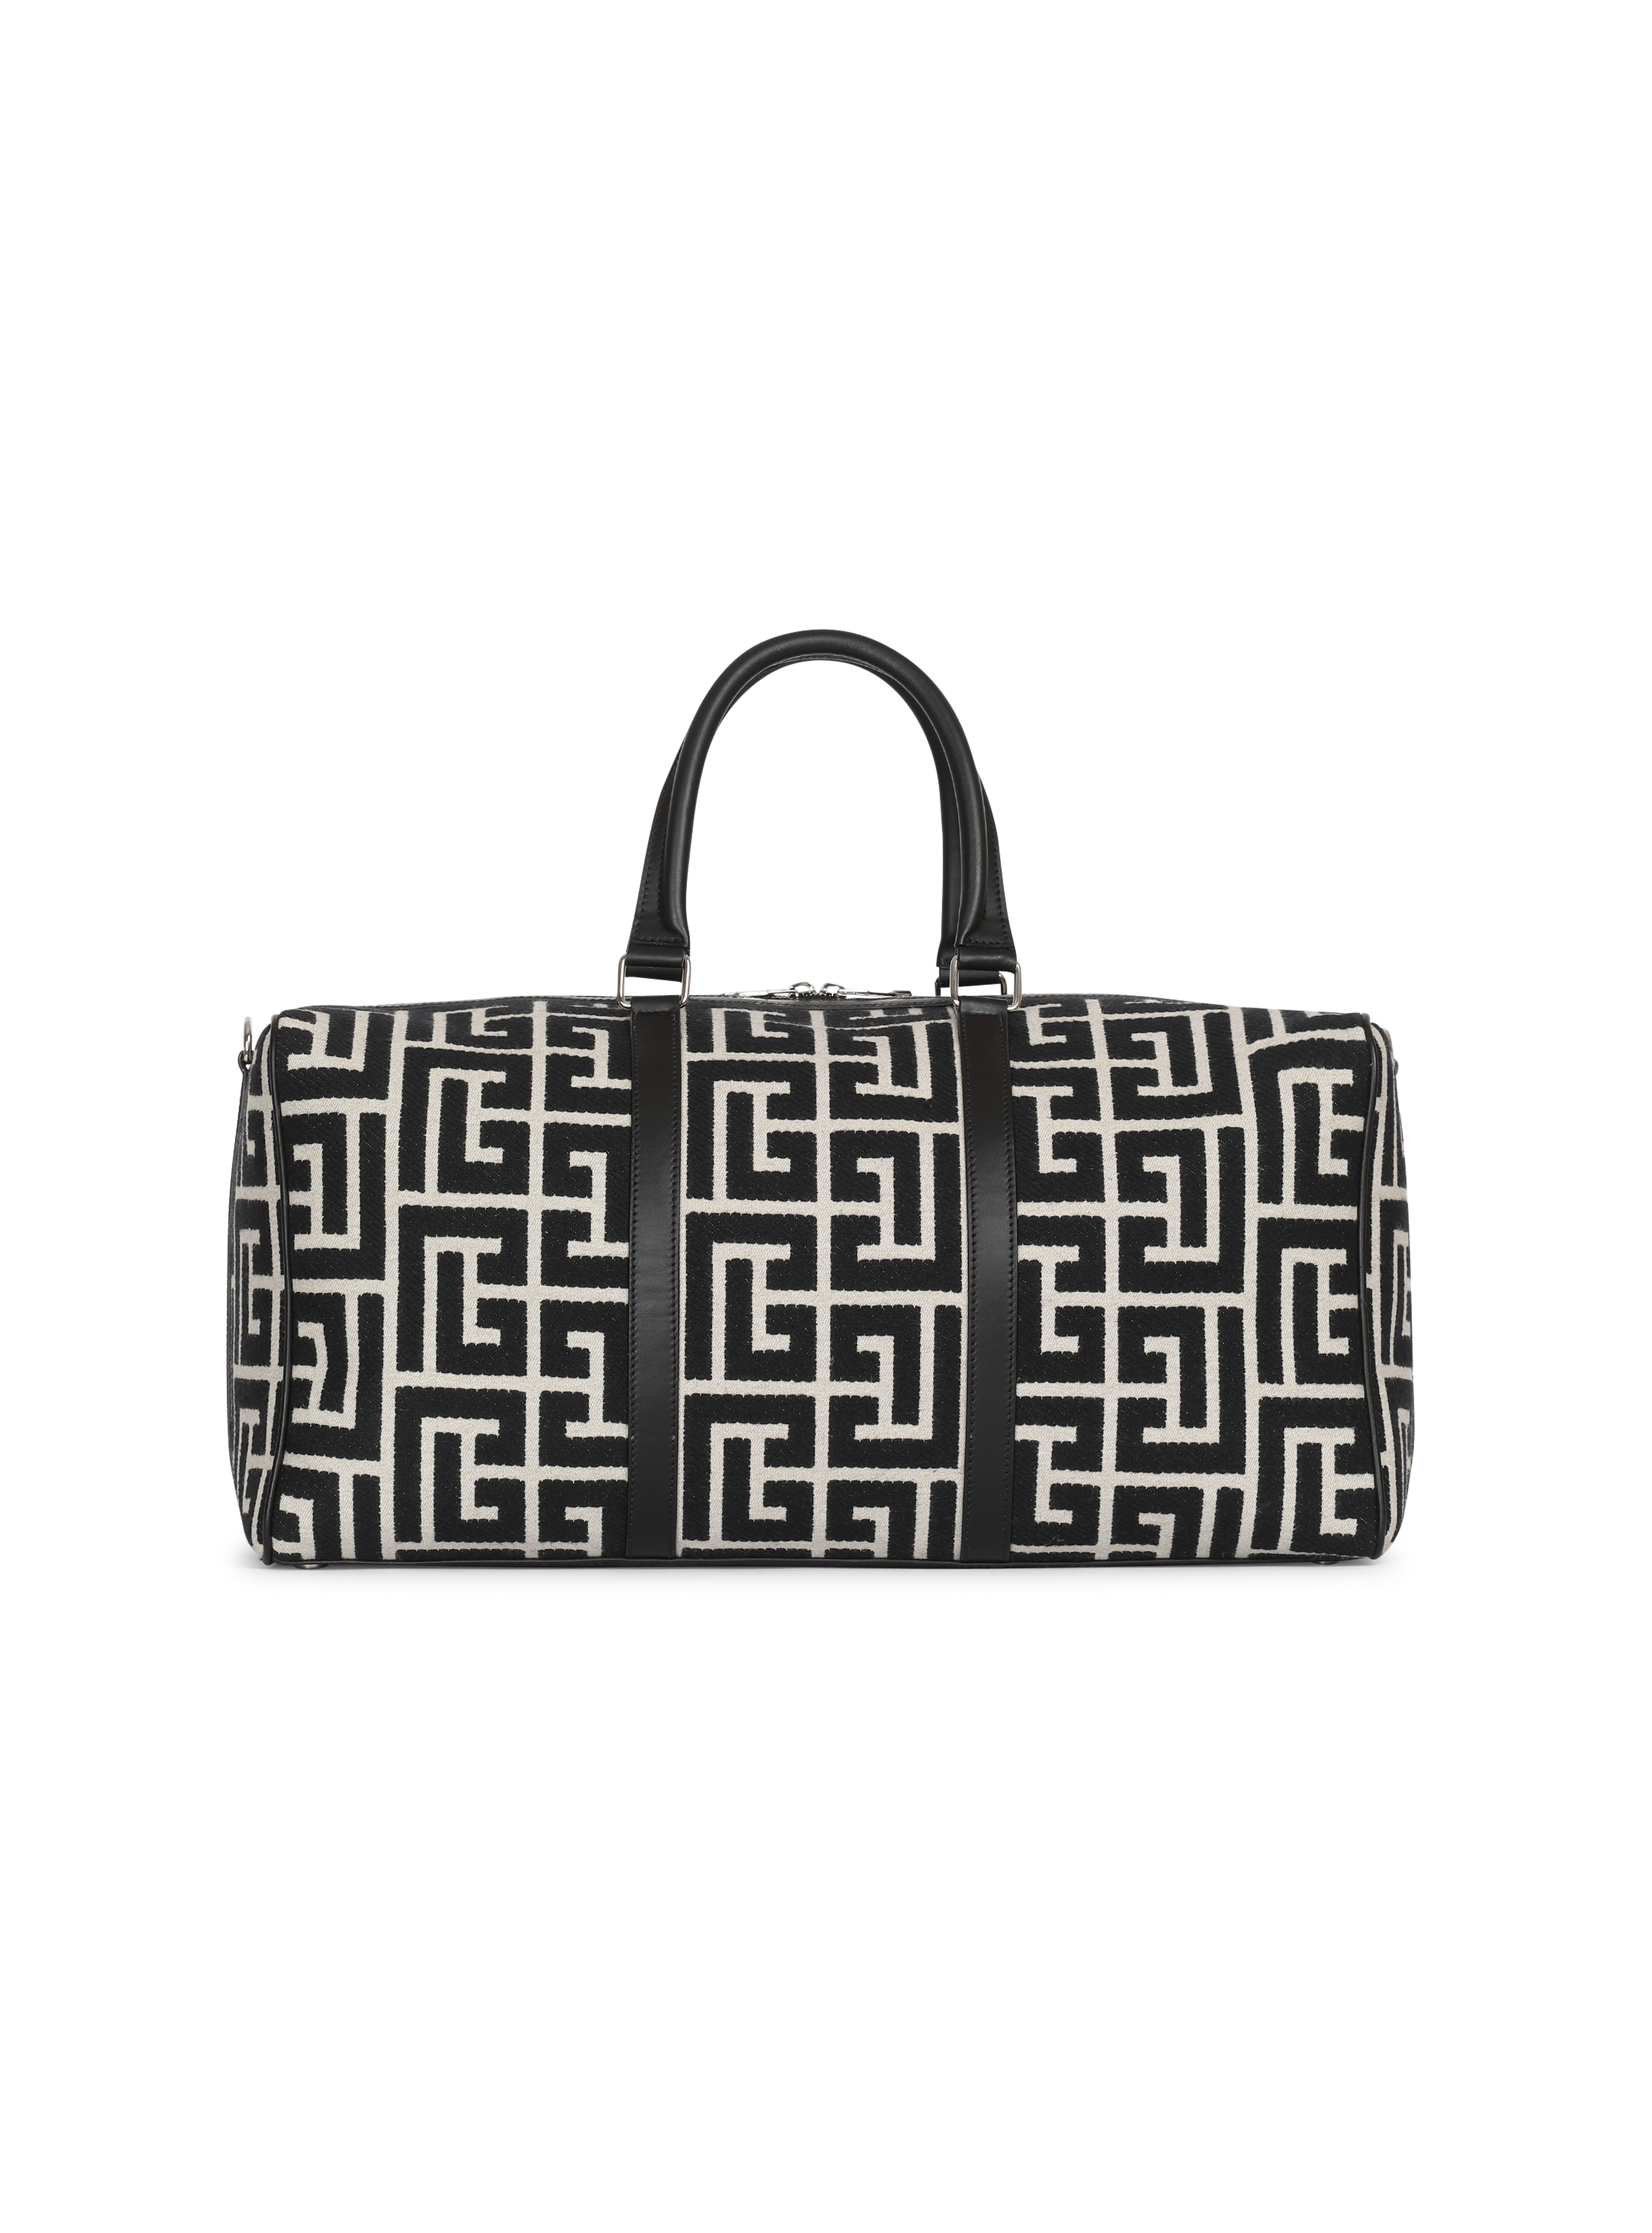 Travel bag with jacquard maxi monogram, black